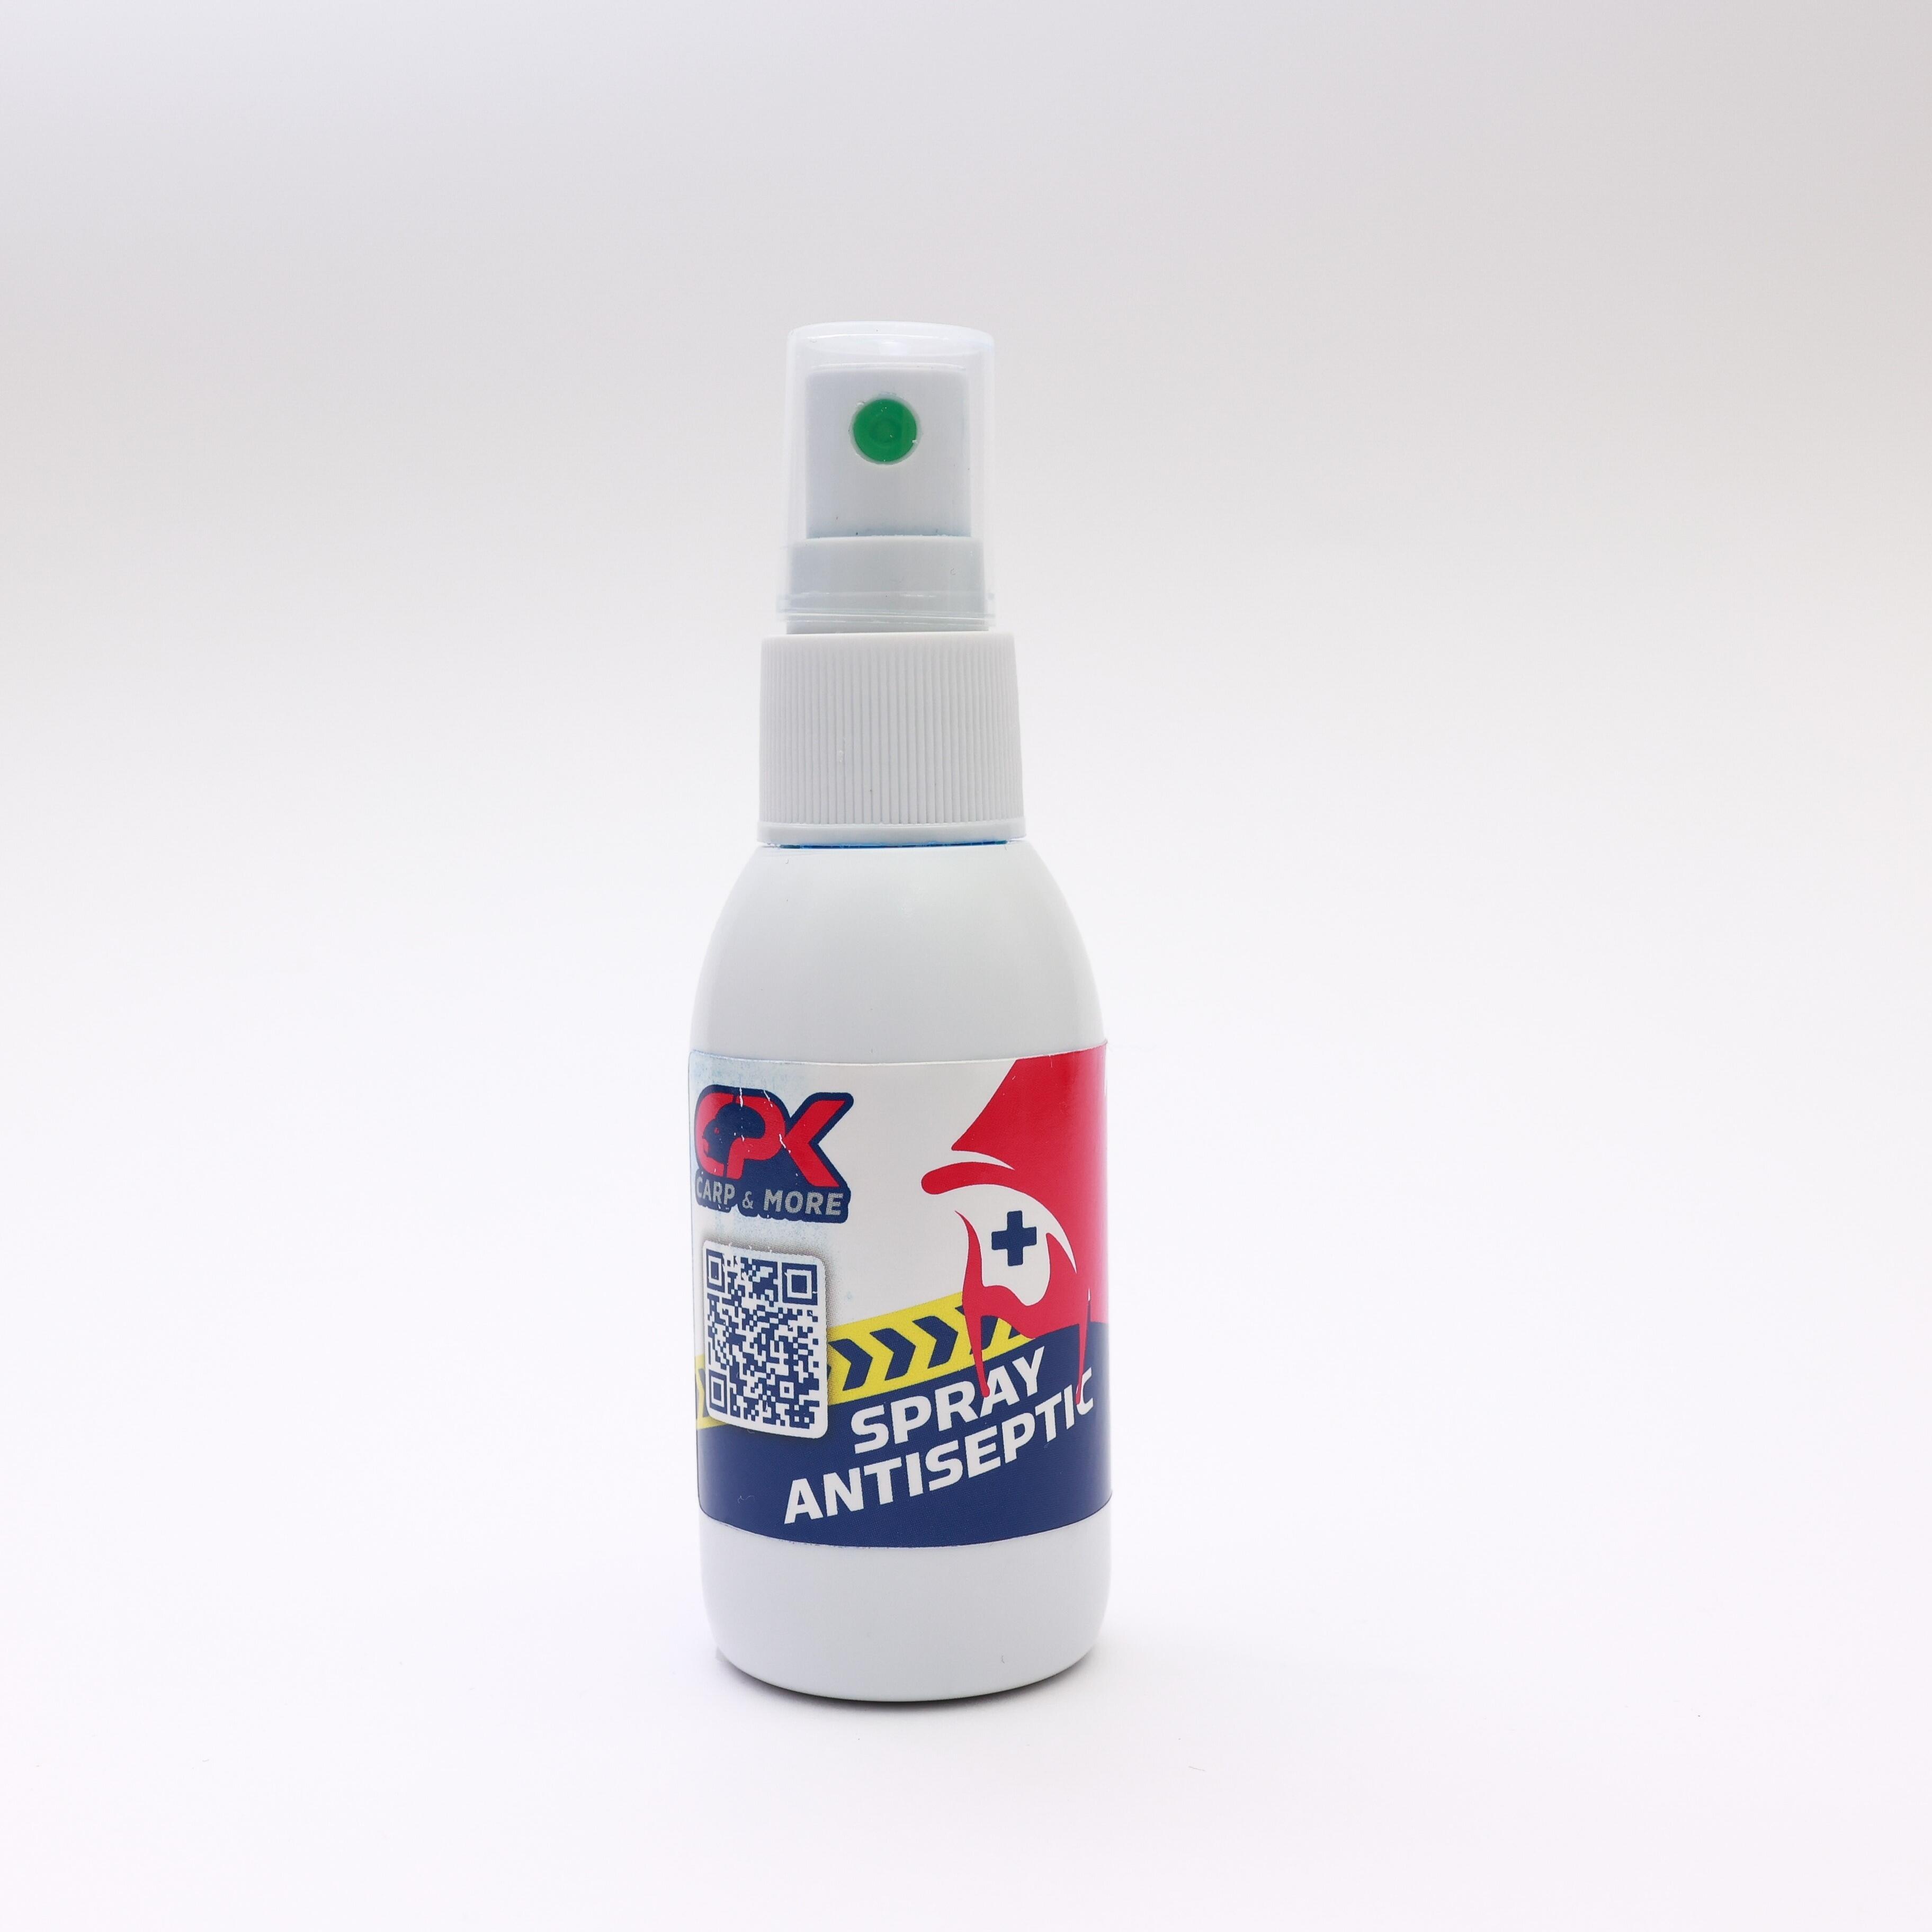 Spray antiseptic crap CPK CARP & MORE antiseptic